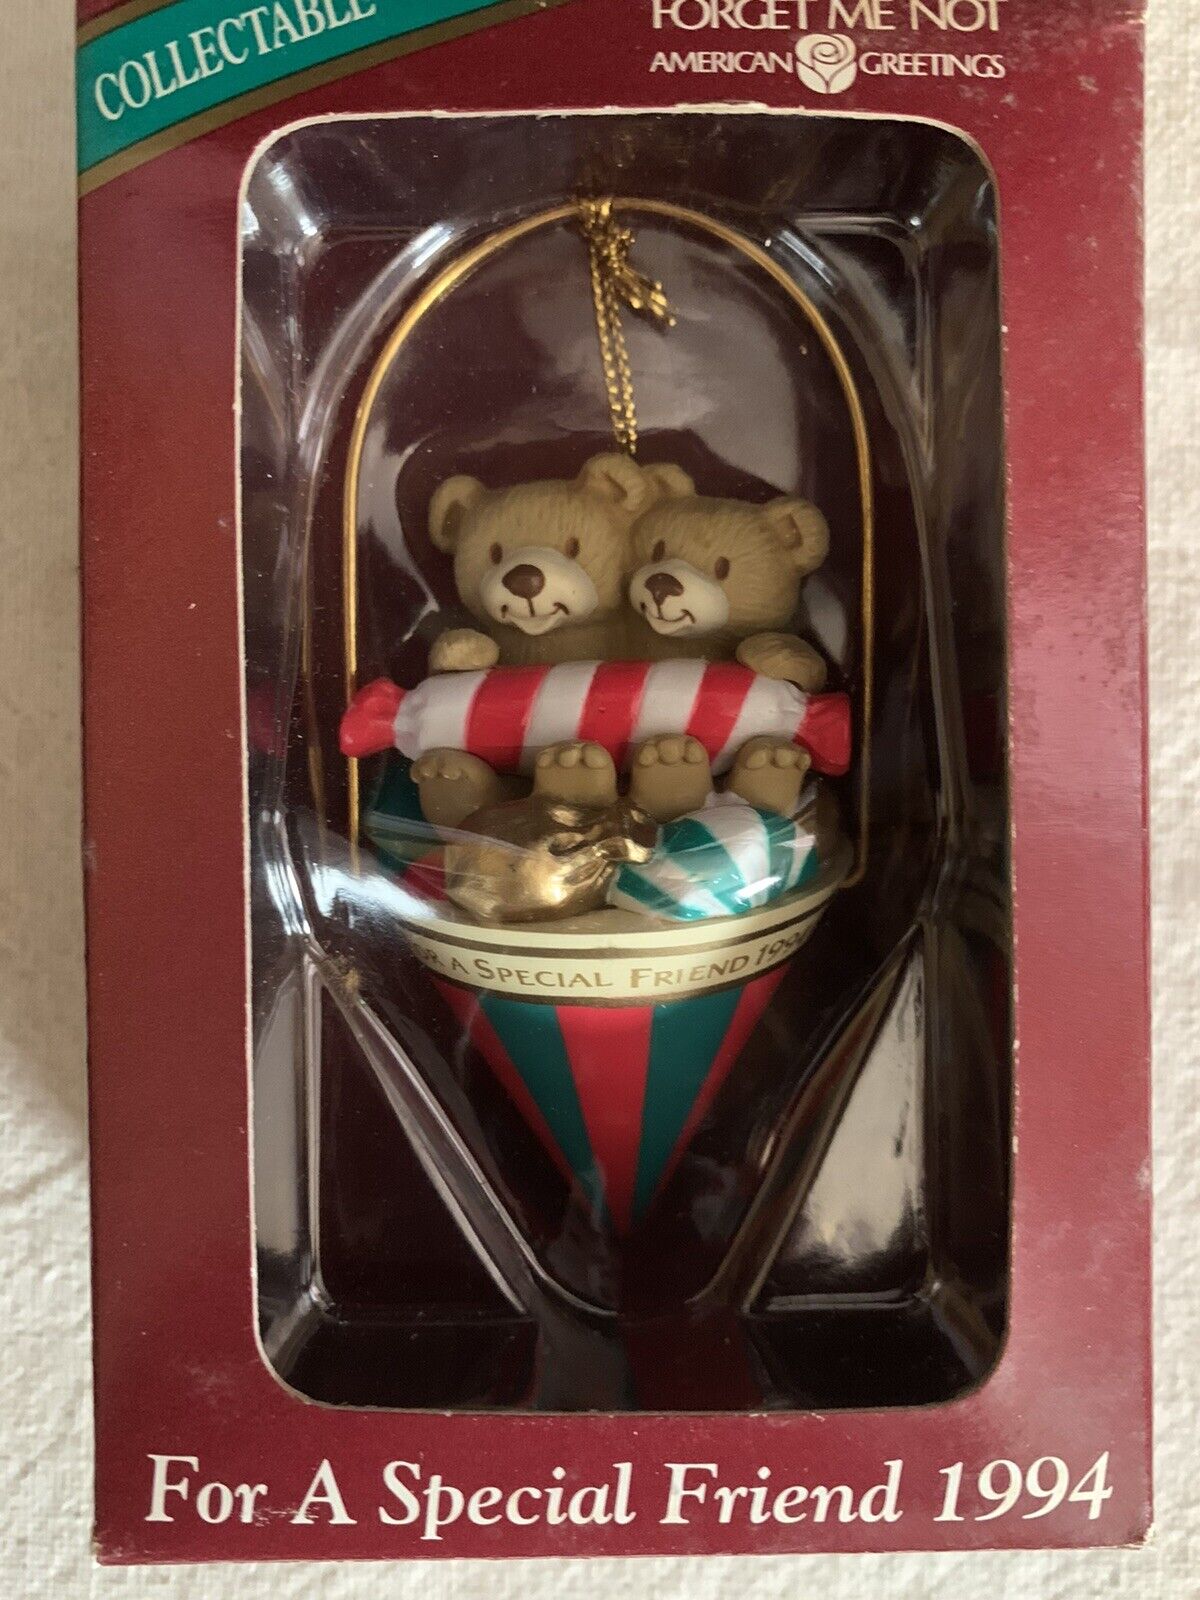 American Greetings Forget Me Not Christmas Ornament 1994 Teddy Bears NIB